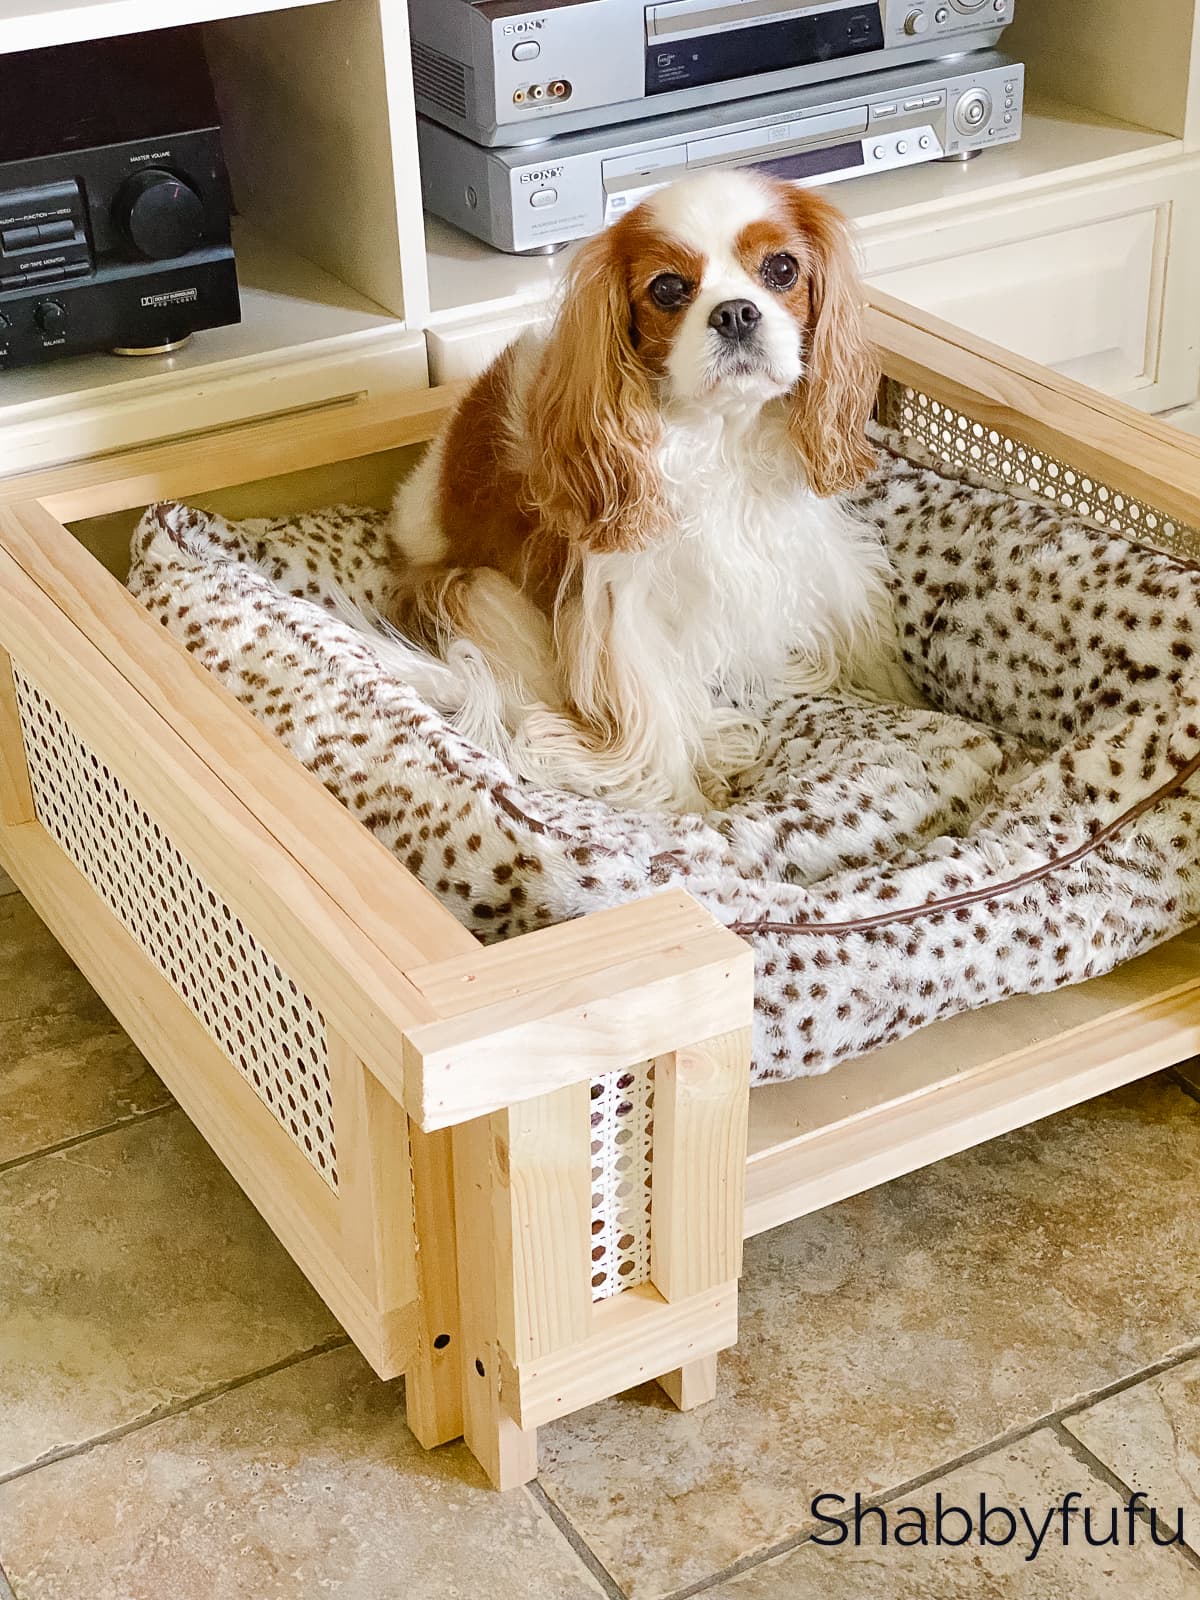 Darby in the modern dog bed diy